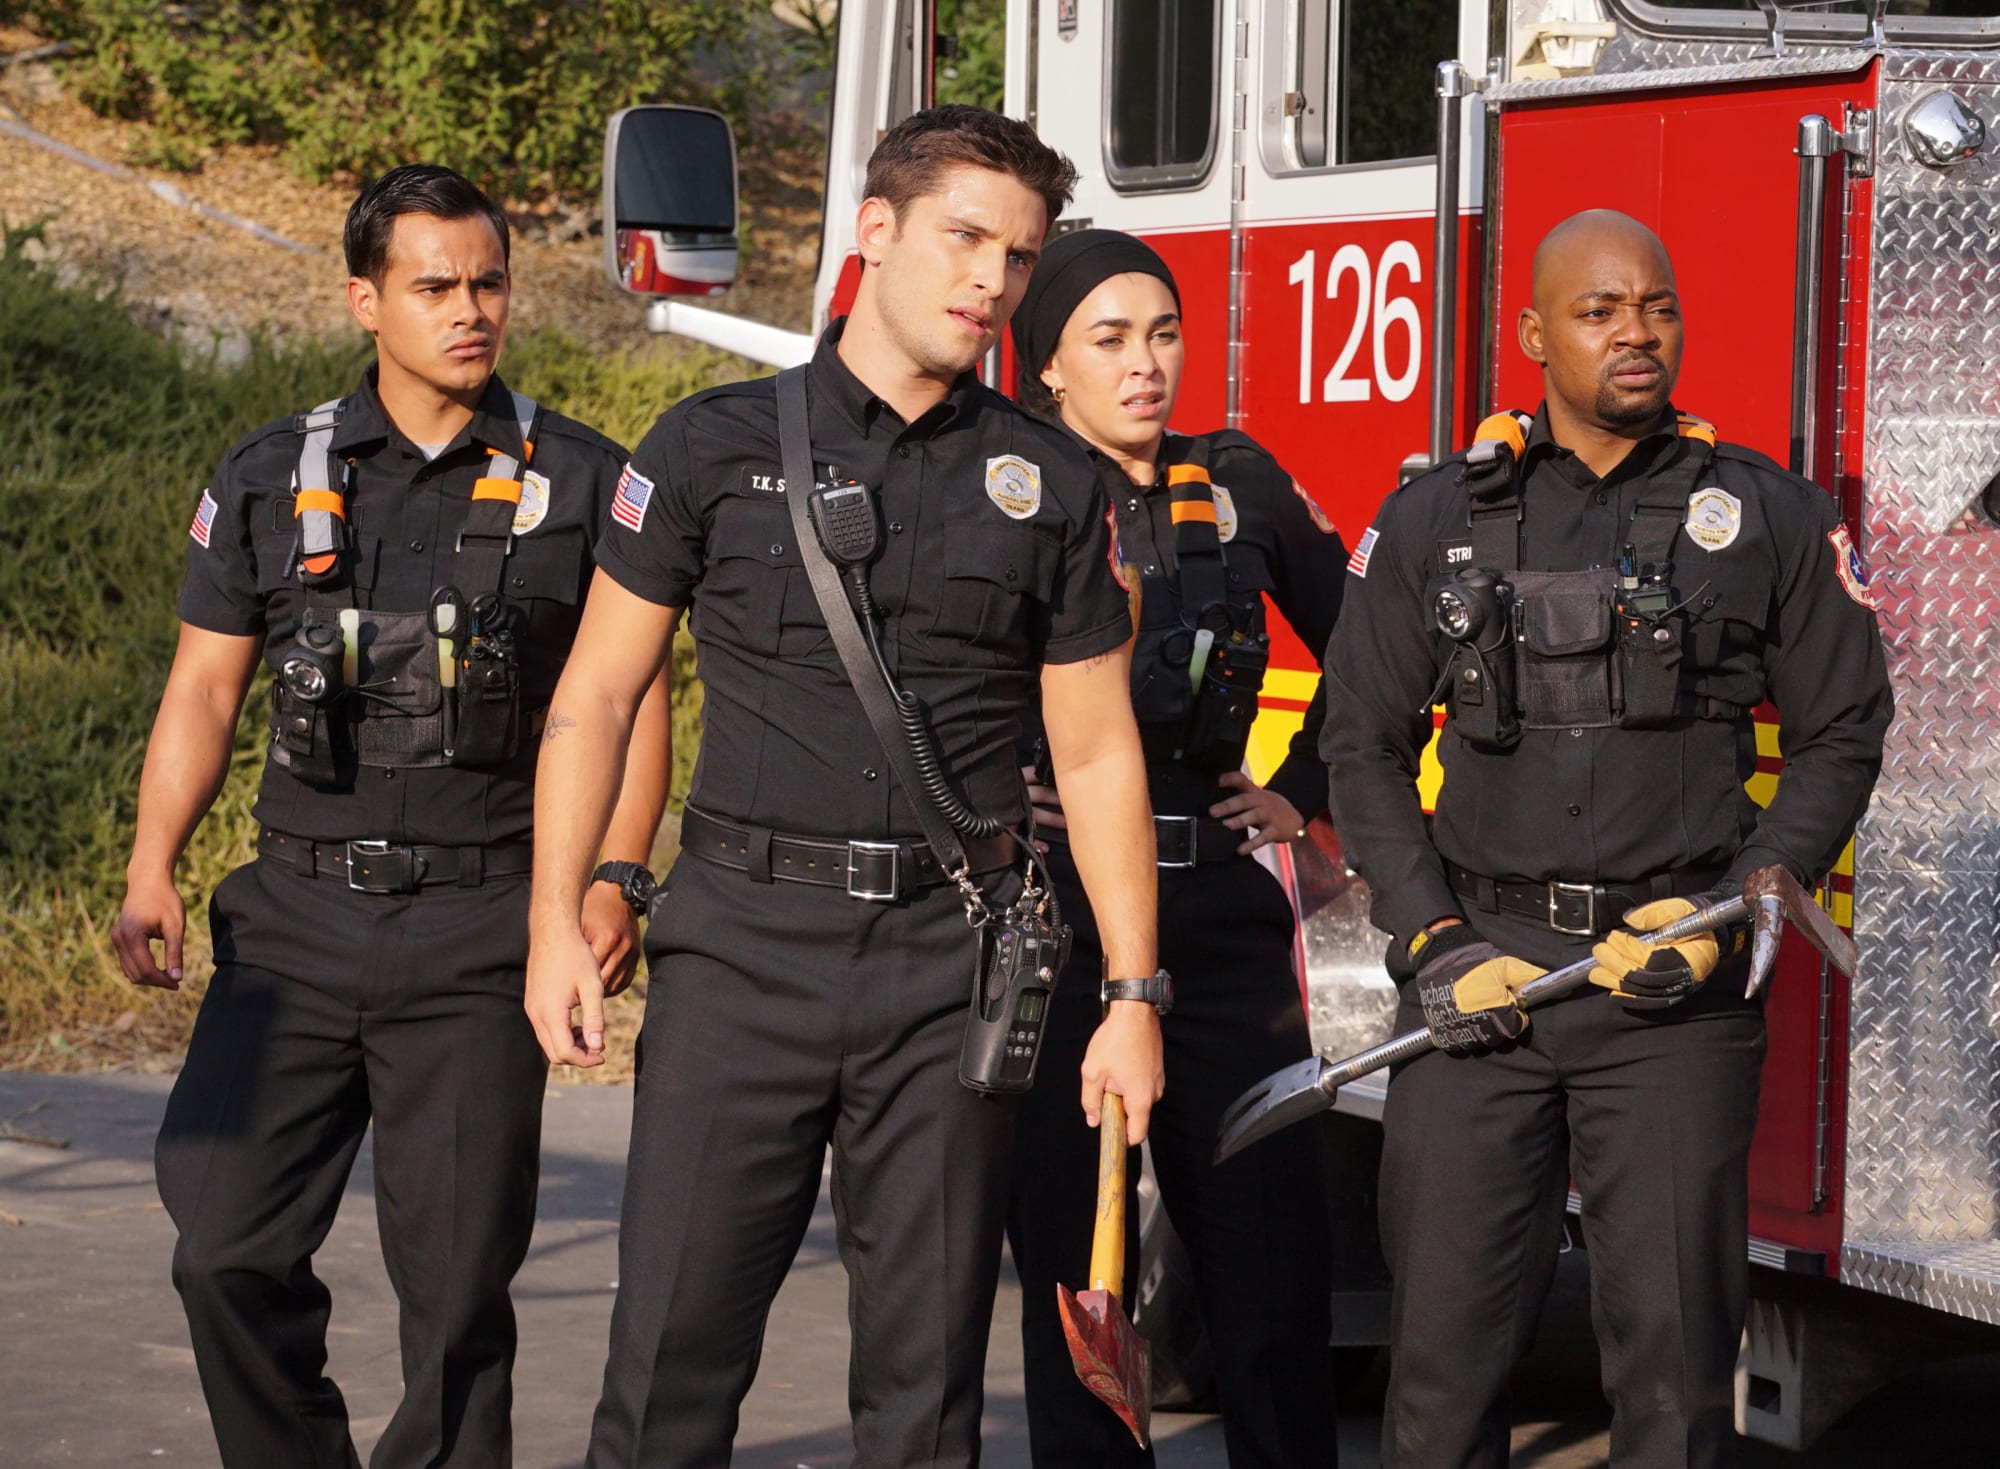 911 Lone Star season 3 Premiere, release date, cast, trailer and more